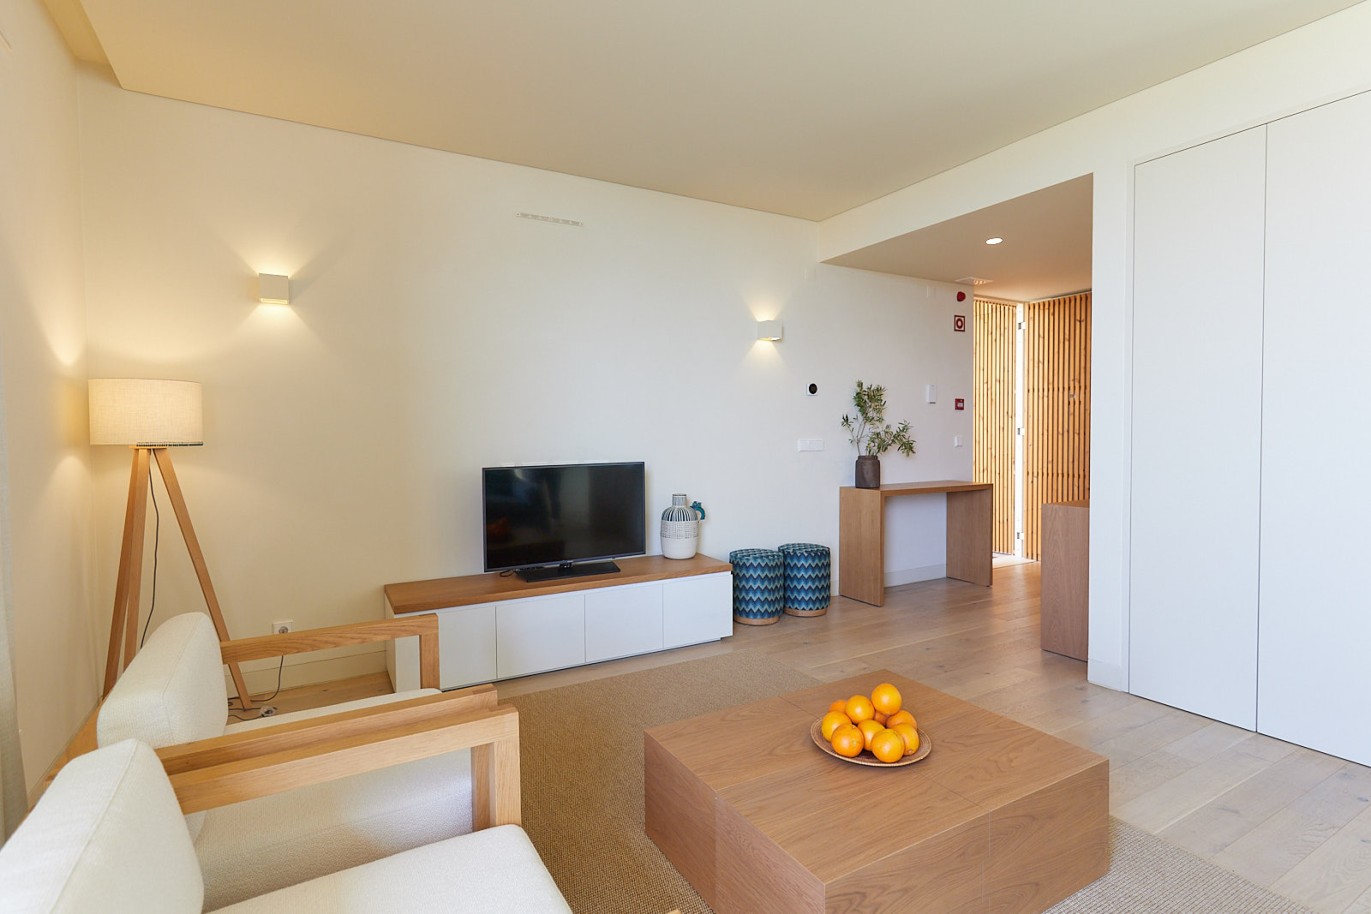 2 bedroom apartment in resort, for sale in Porches, Algarve_230781